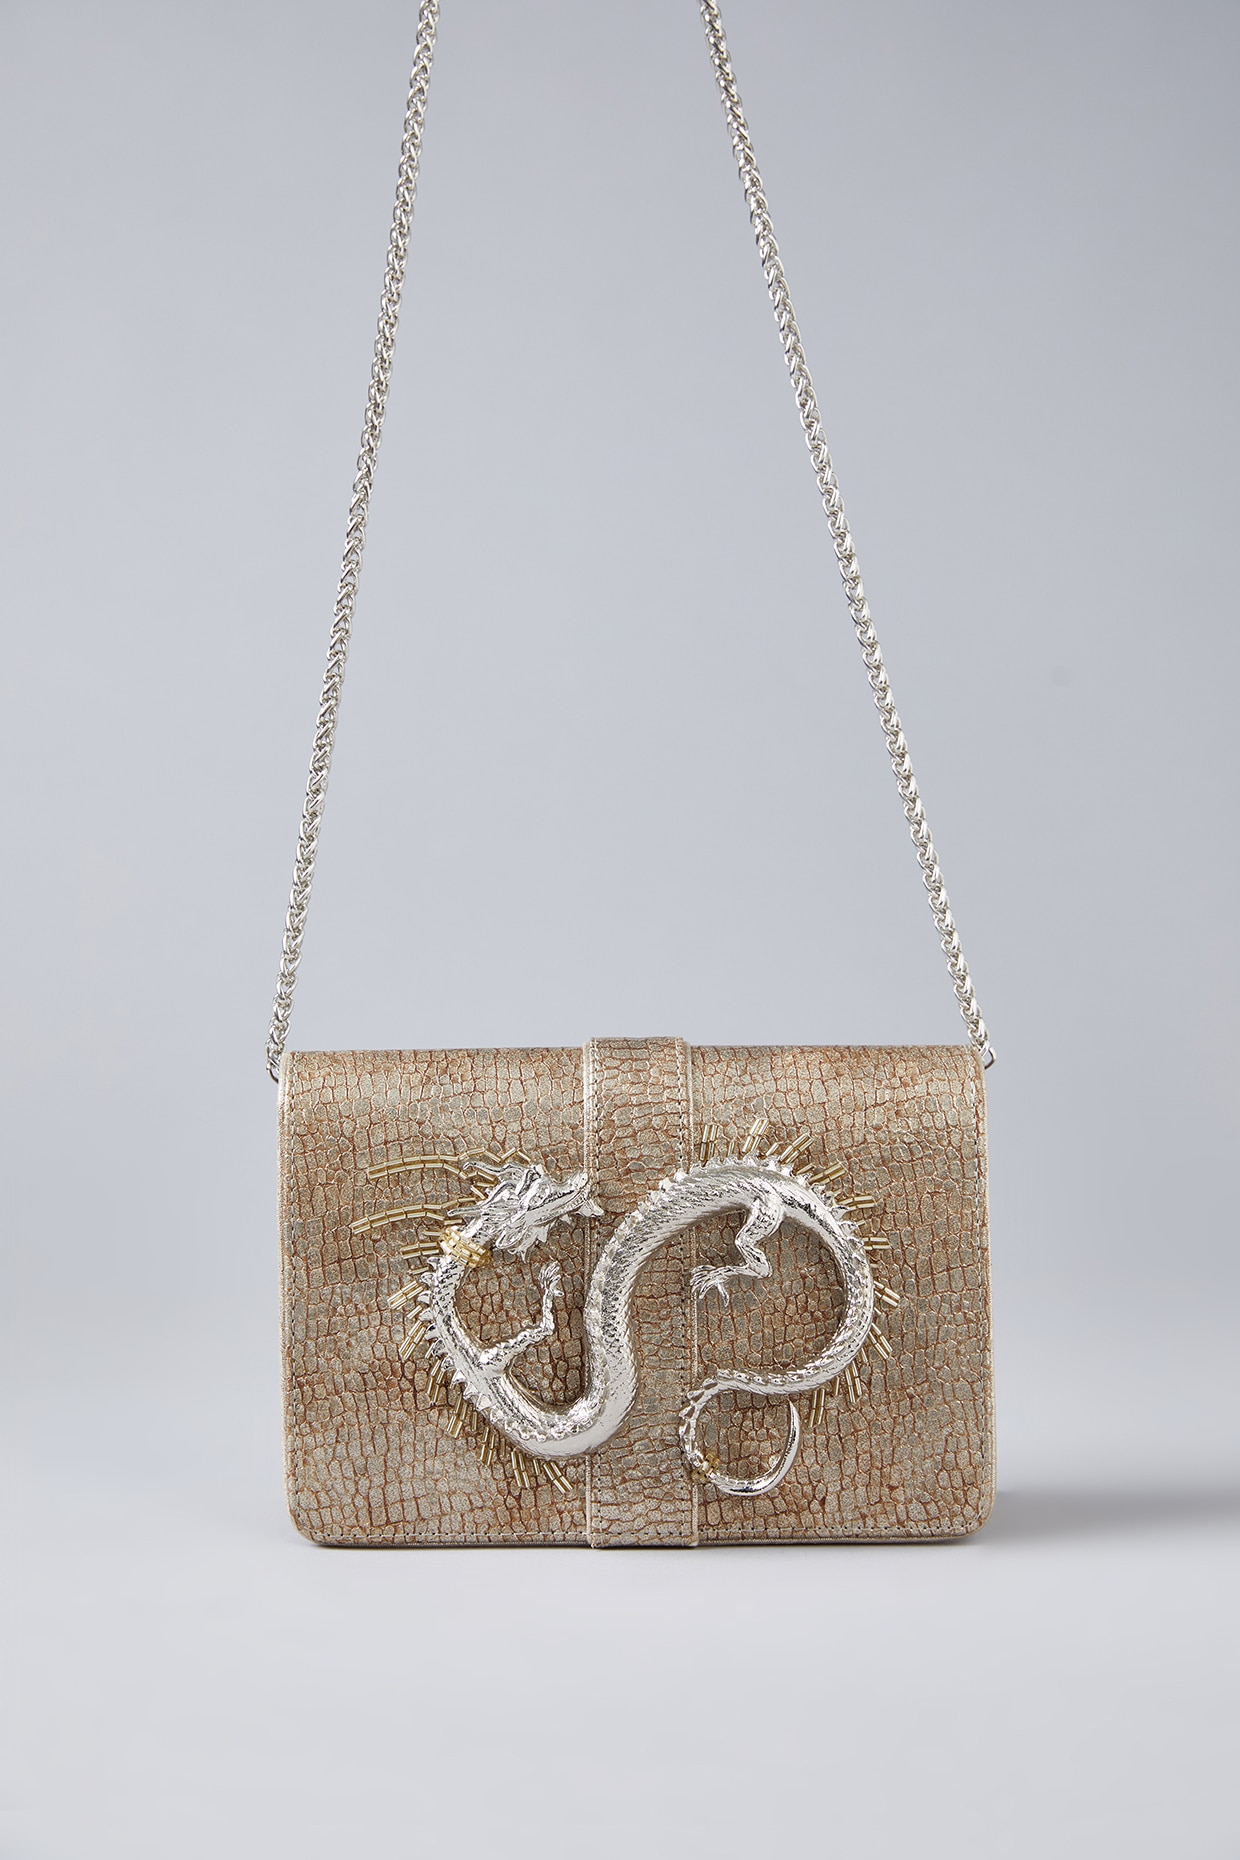 Potli bags ZARDOZI KATDANA Indian wedding velvet/silk fabric bridal handbag  purse at Rs 700/piece | Fabric Potli in Jaipur | ID: 2851279822797